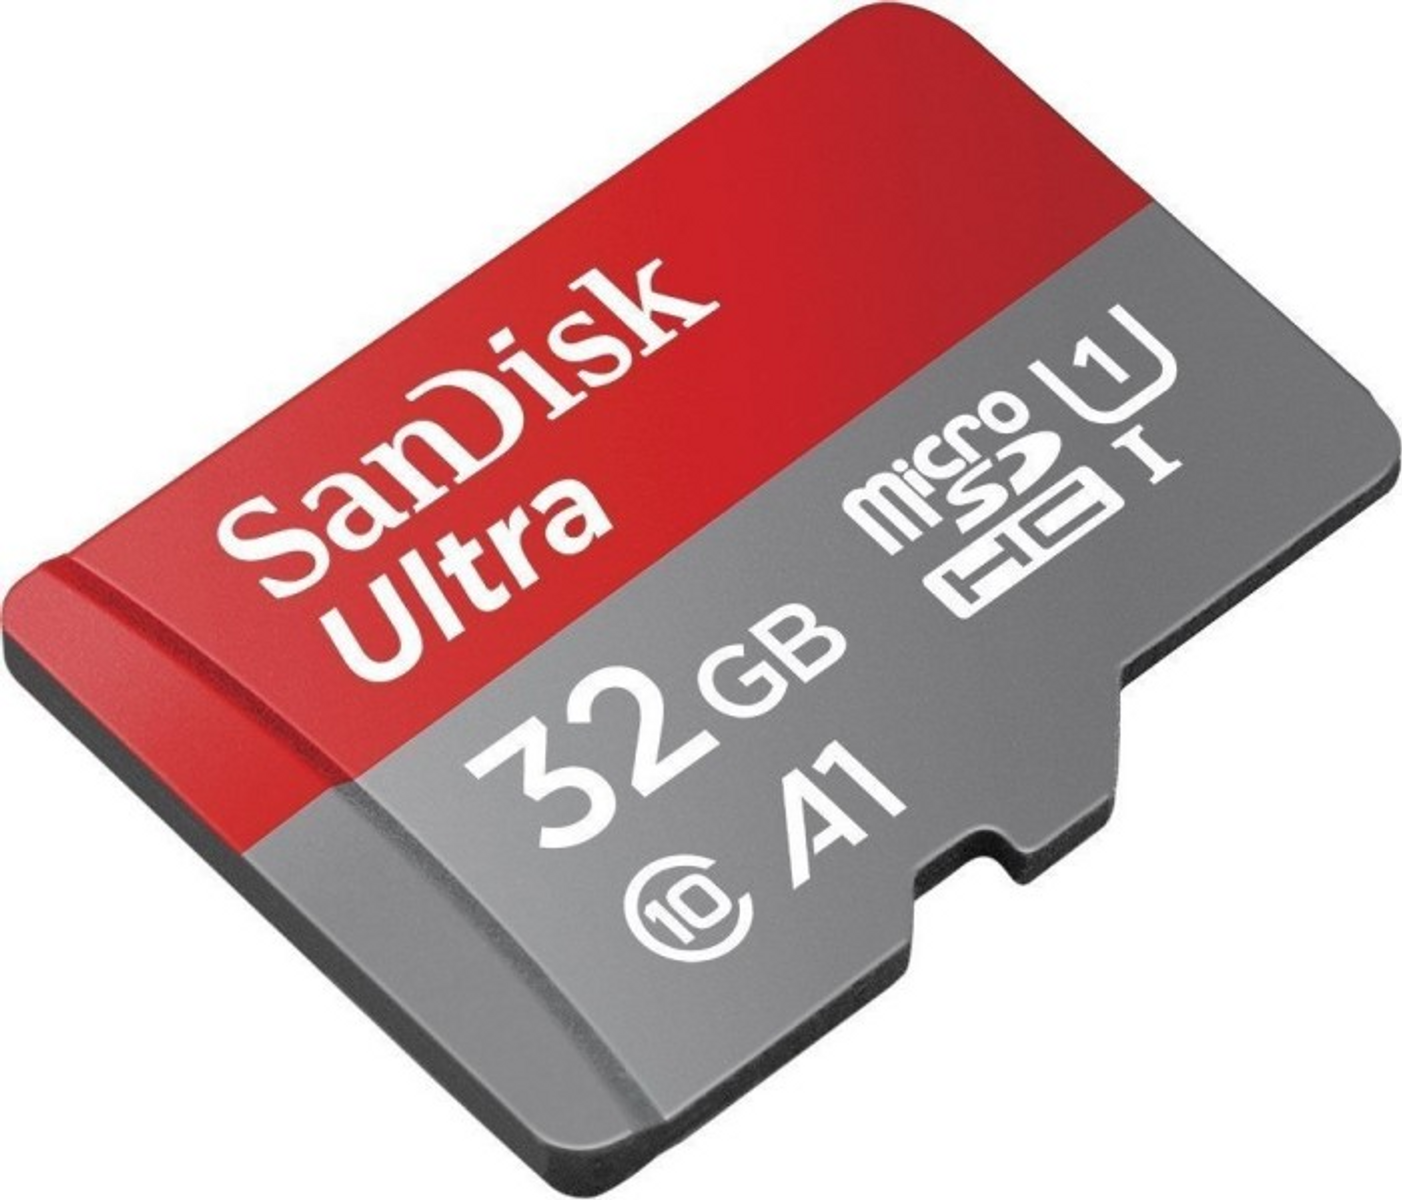 Ultra Class10, GB, 32 (inkl. SANDISK 98 32GB Speicherkarte, Micro-SDHC Adapter, SDSQUA4-032G-GN6MA), SanDisk MB/s microSDHC